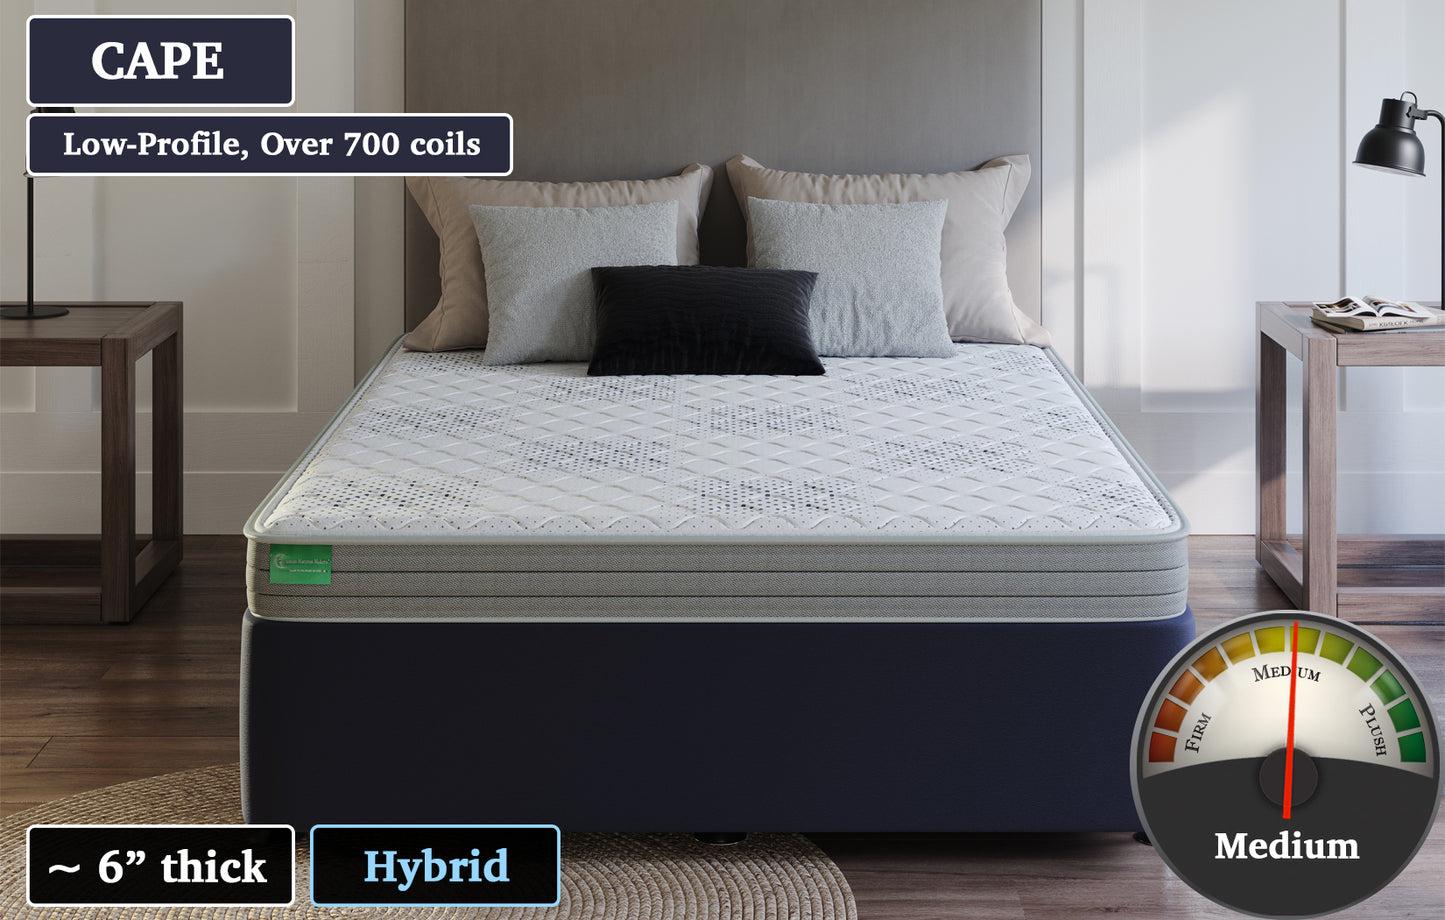 Cape Hybrid, custom mattress